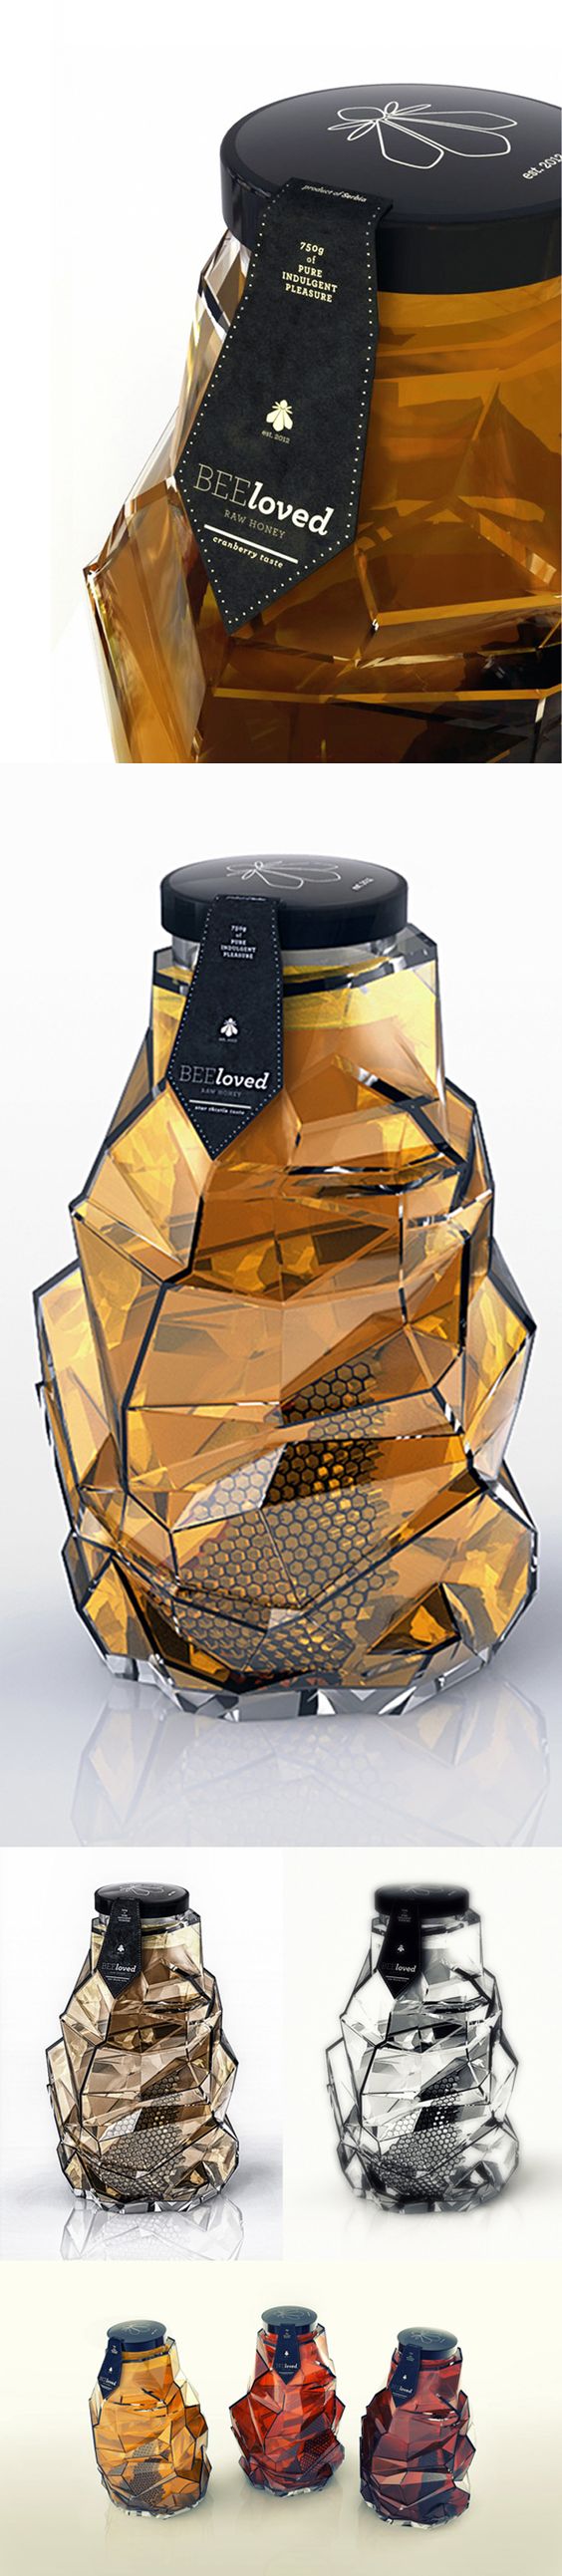 Honey packaging designed by Tamara Mihajlovic (pretty cool, but I keep thinking - 